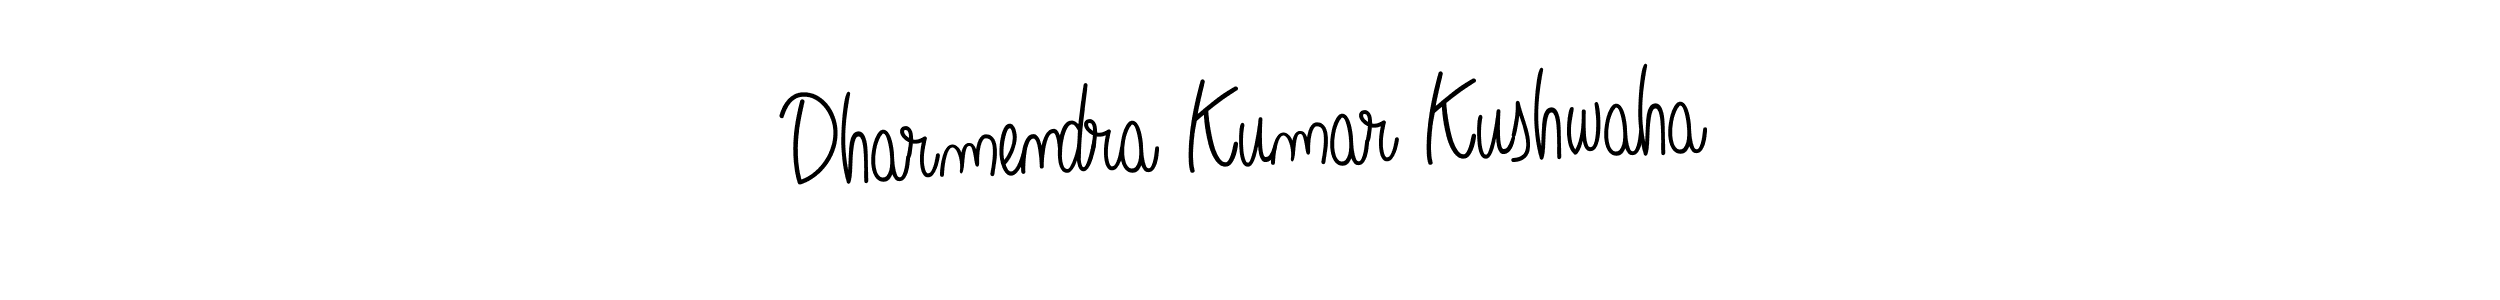 Best and Professional Signature Style for Dharmendra Kumar Kushwaha. Angelique-Rose-font-FFP Best Signature Style Collection. Dharmendra Kumar Kushwaha signature style 5 images and pictures png